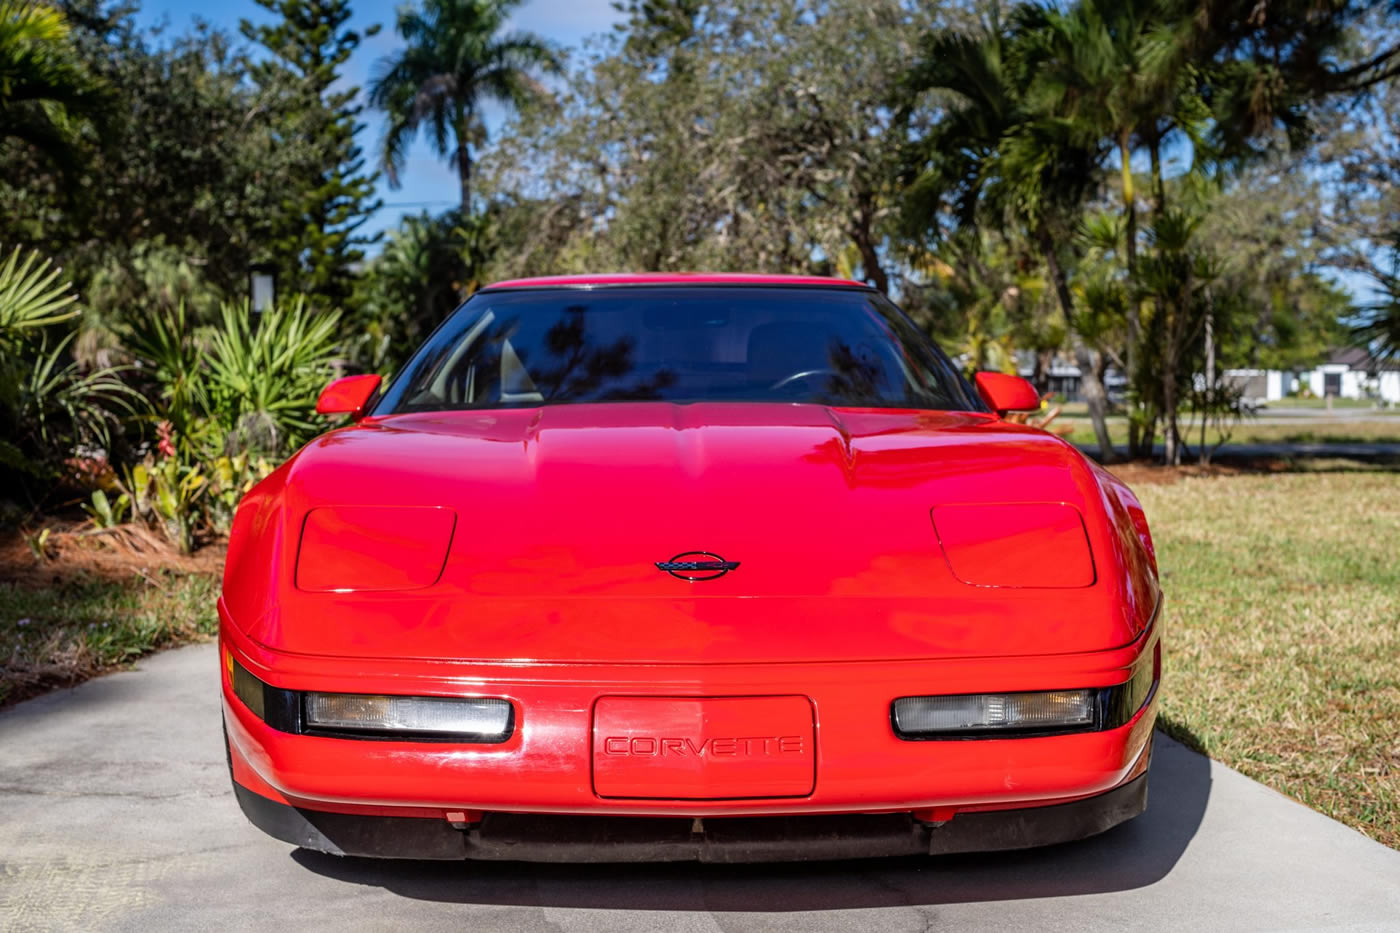 1991 Corvette ZR-1 in Bright Red Over Gray Leather